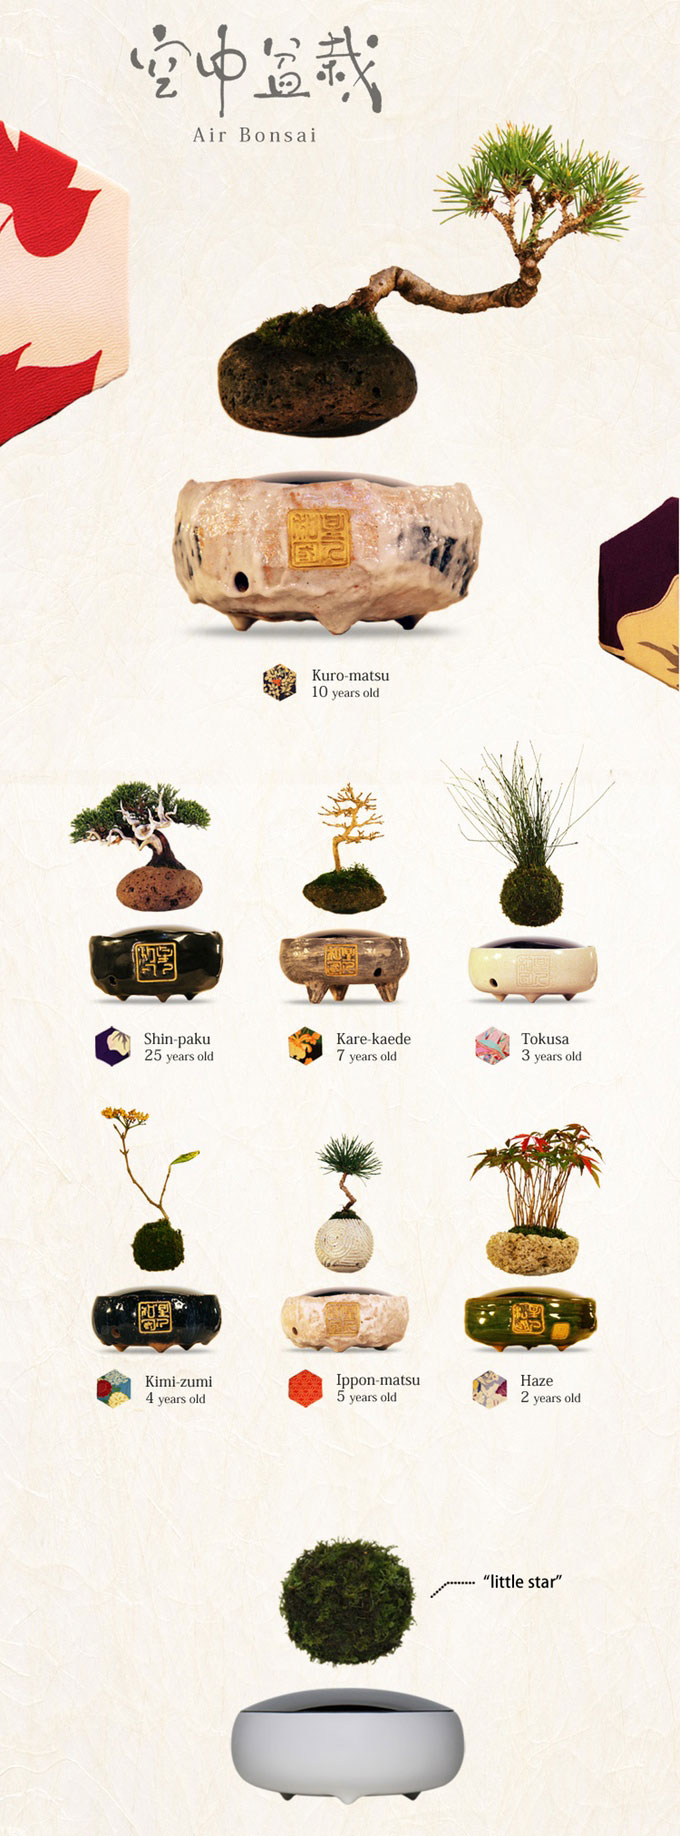 floating air bonsai by hoshinchu on kickstarter (2)